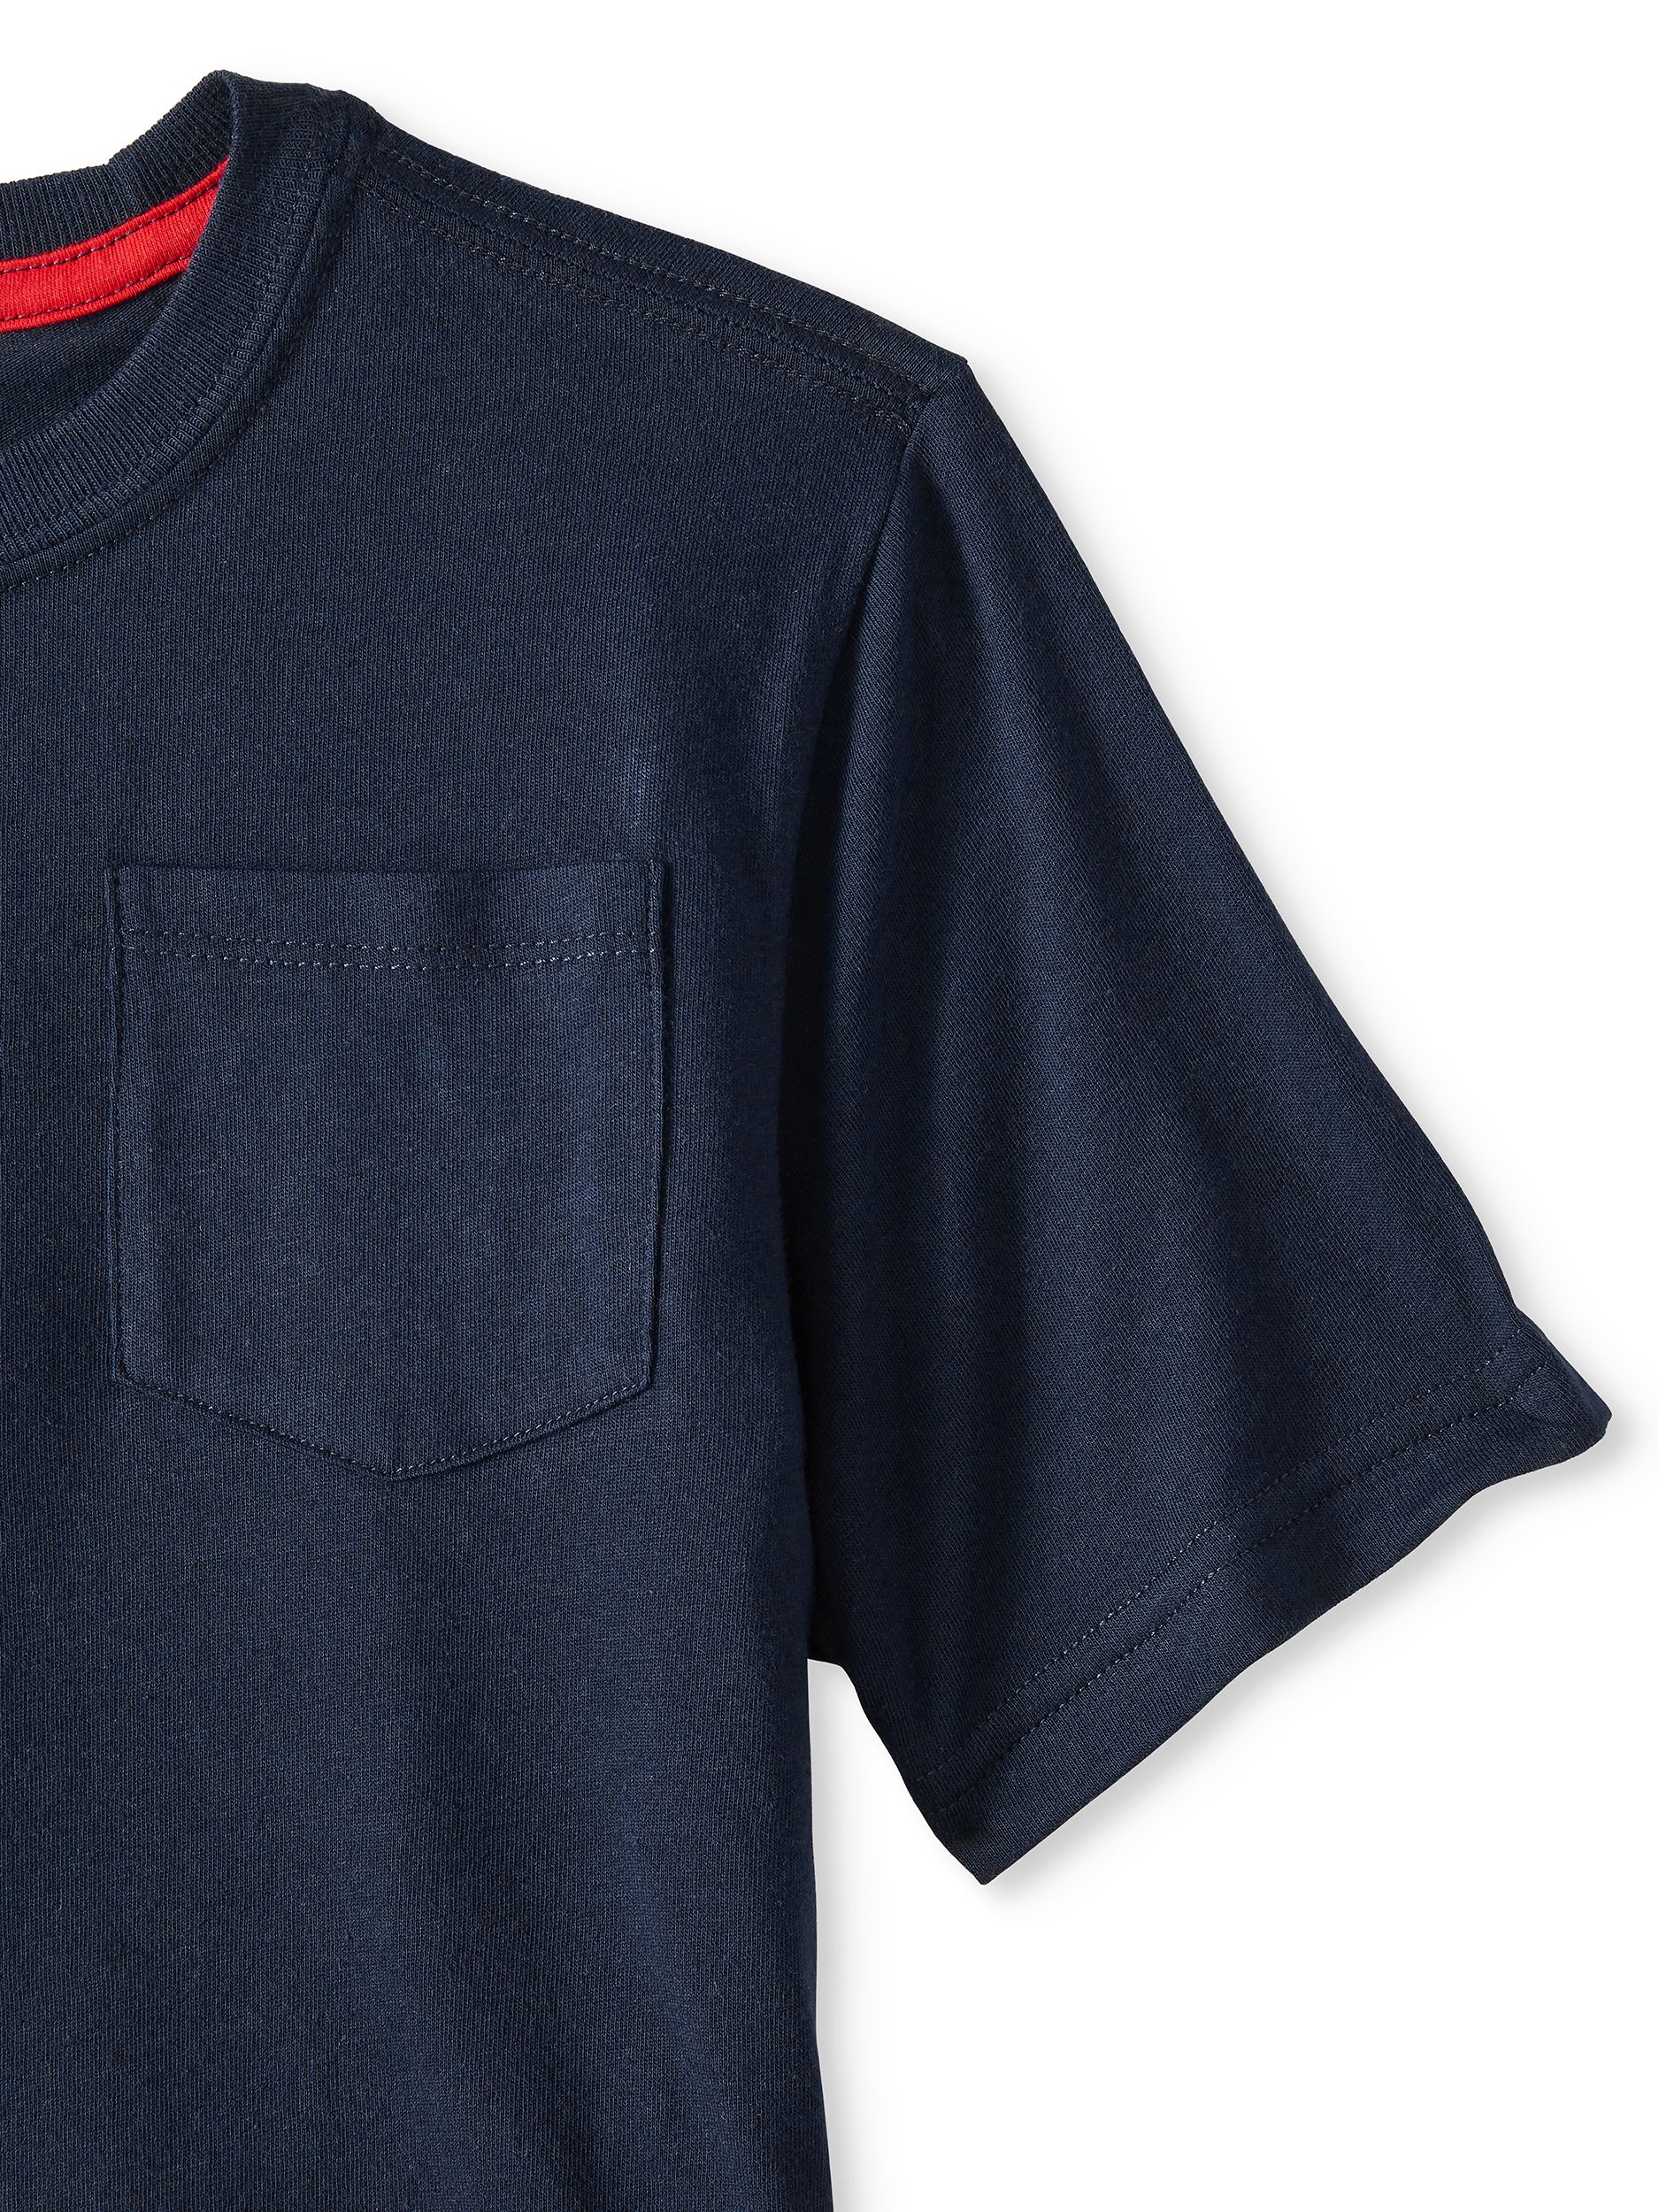 Americana Seasonal Short Sleeve T-Shirt, 2-Pack Set (Little Boys, Big Boys, & Husky) - image 3 of 3